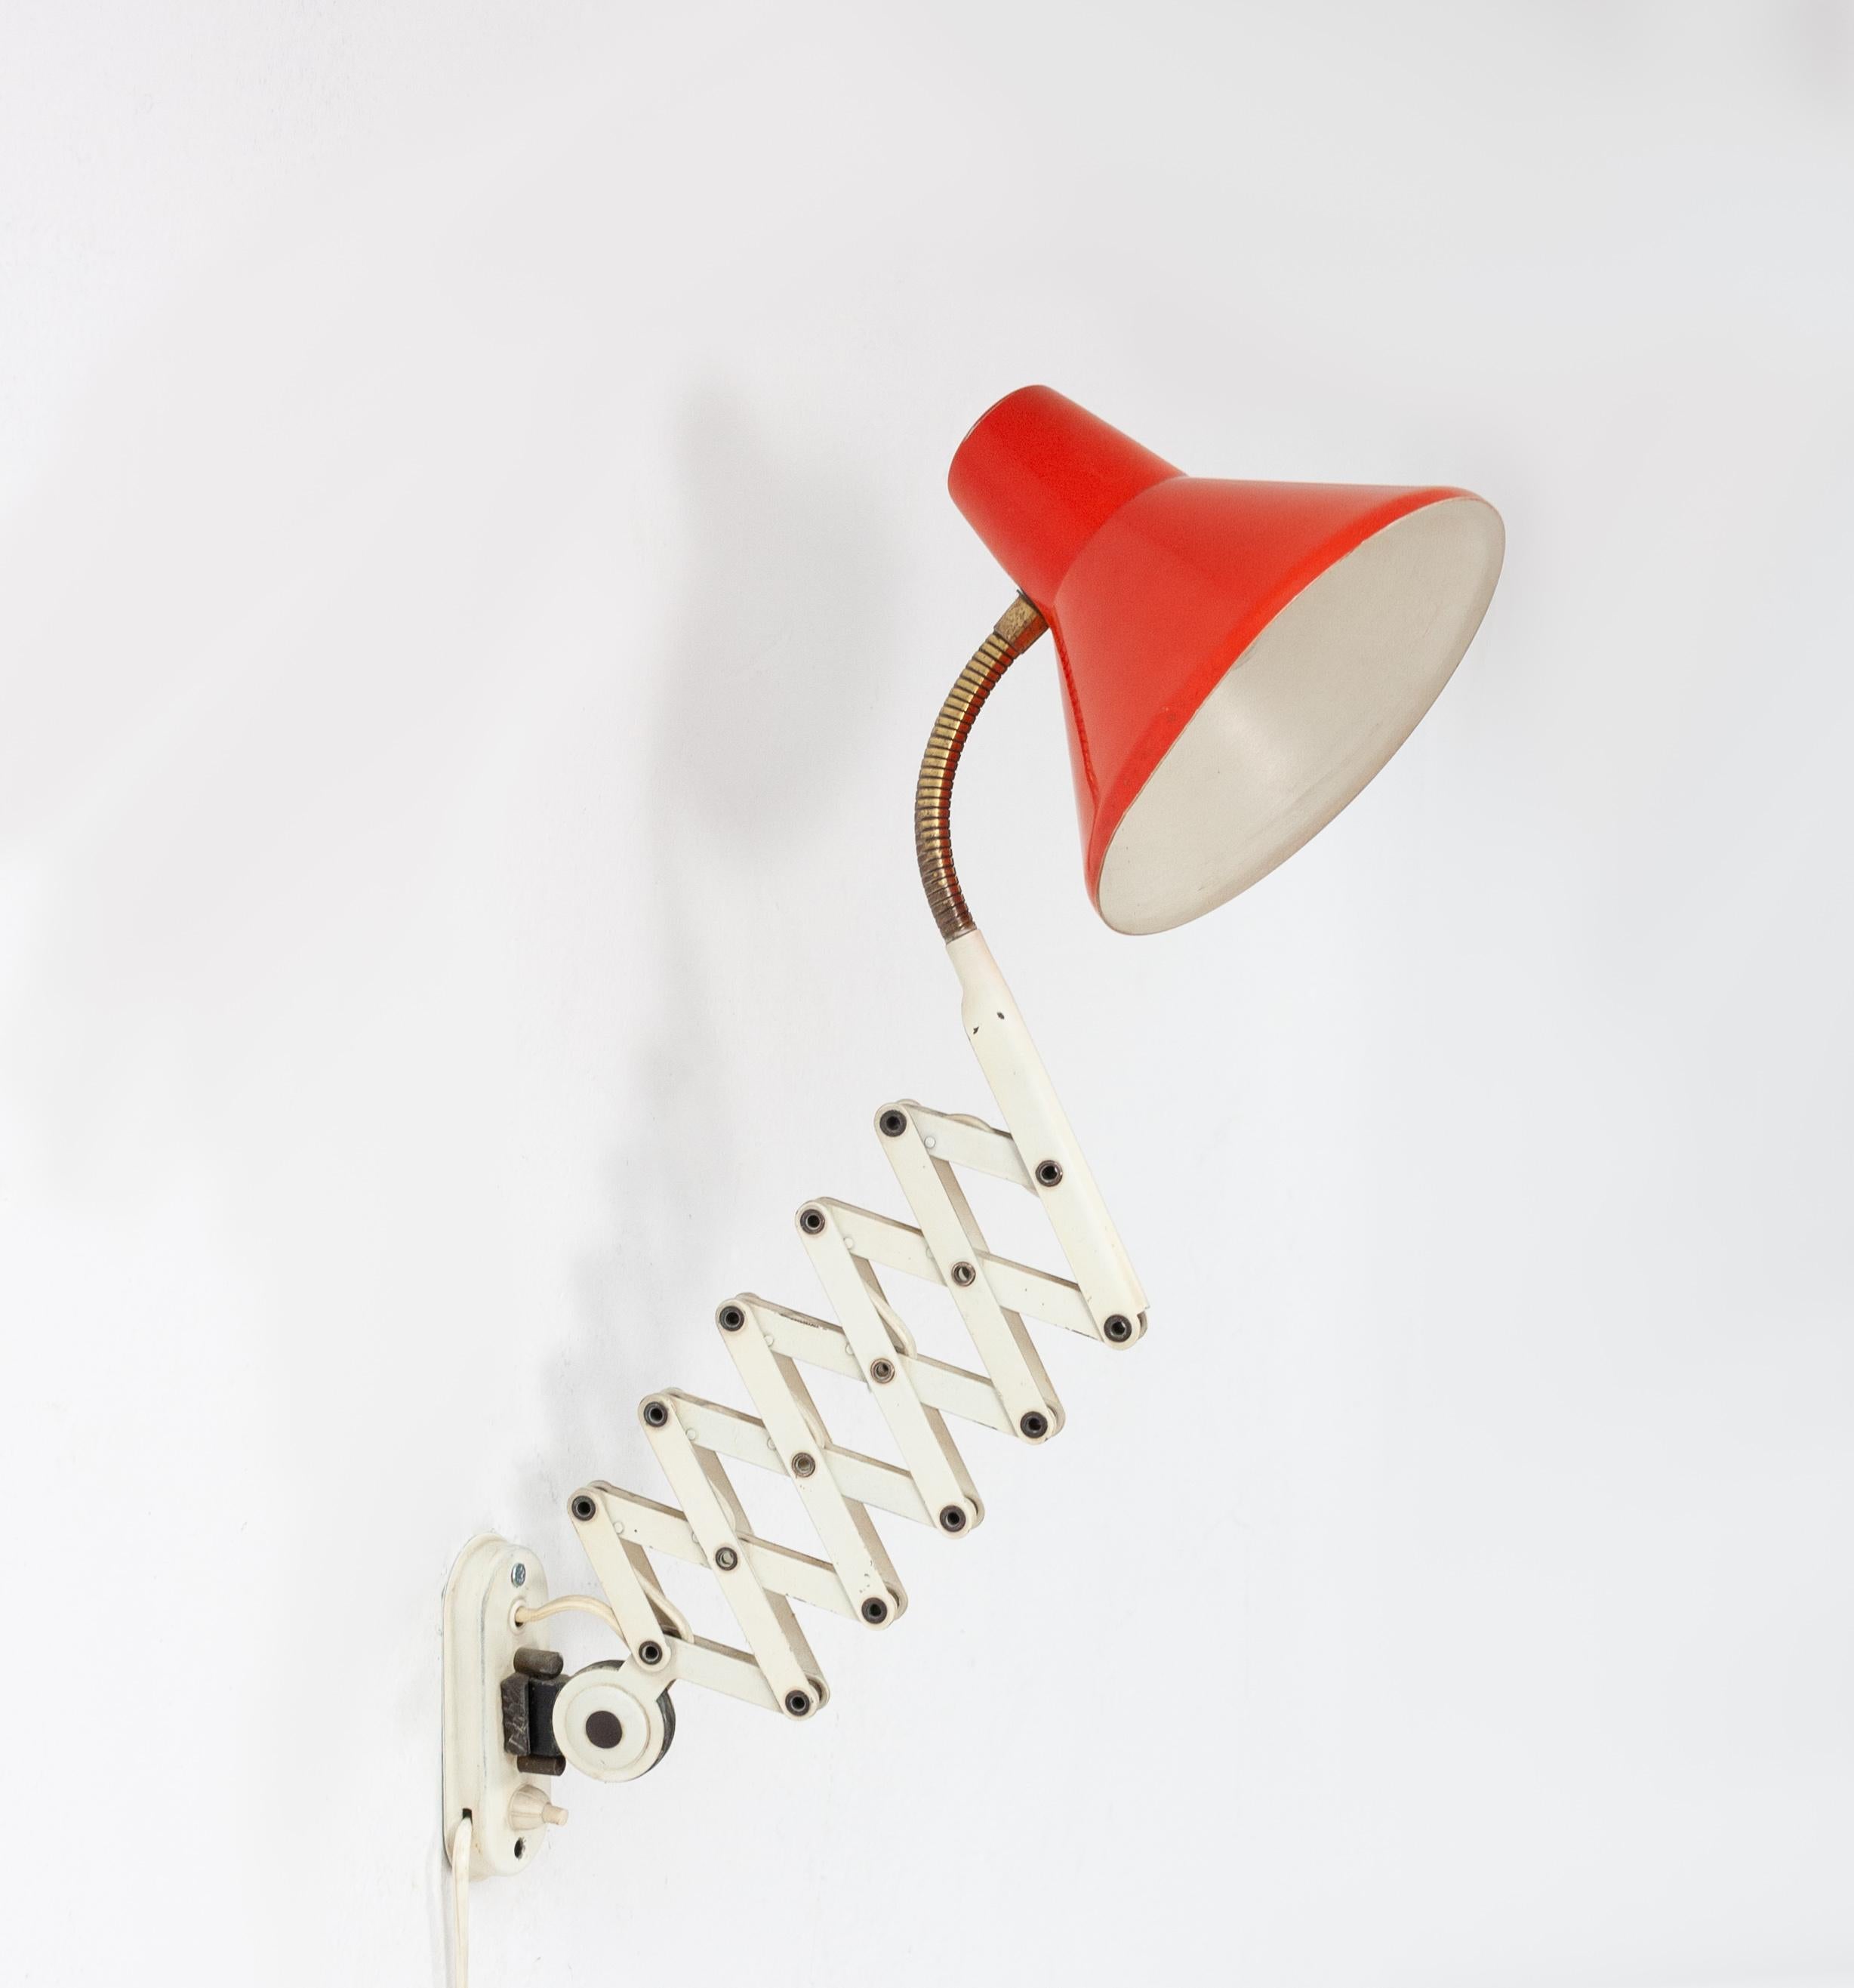 Lamp Hala Zeist Holland 1950s metal scissor lamp wall lamp. Orange red shade.
A beautiful minimalist design scissor lamp. Extendable to 75 cm diameter shade 16cm
Lamp is in good vintage condition.